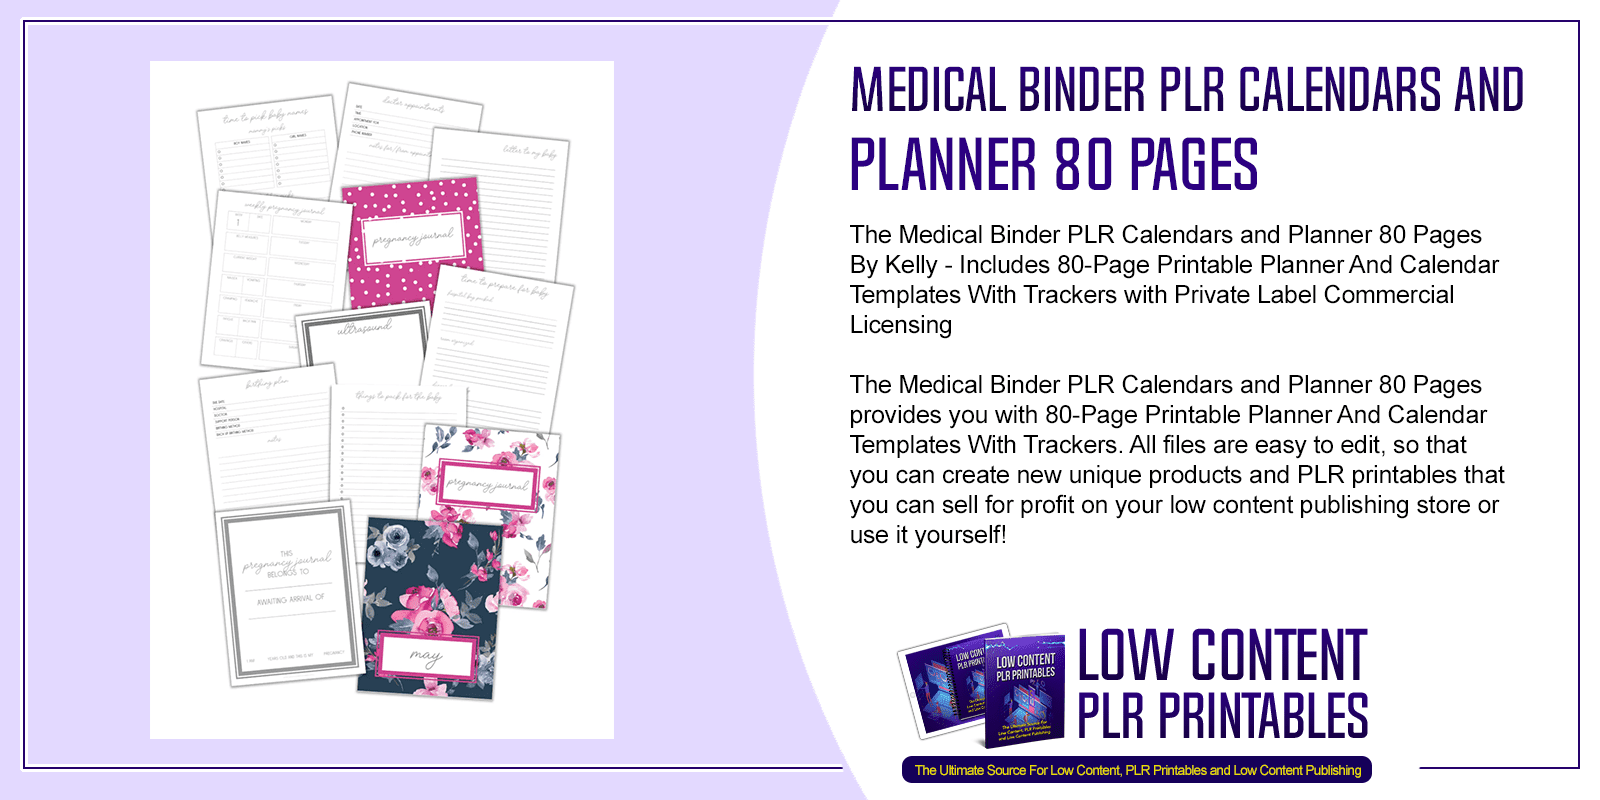 Medical Binder PLR Calendars and Planner 80 Pages